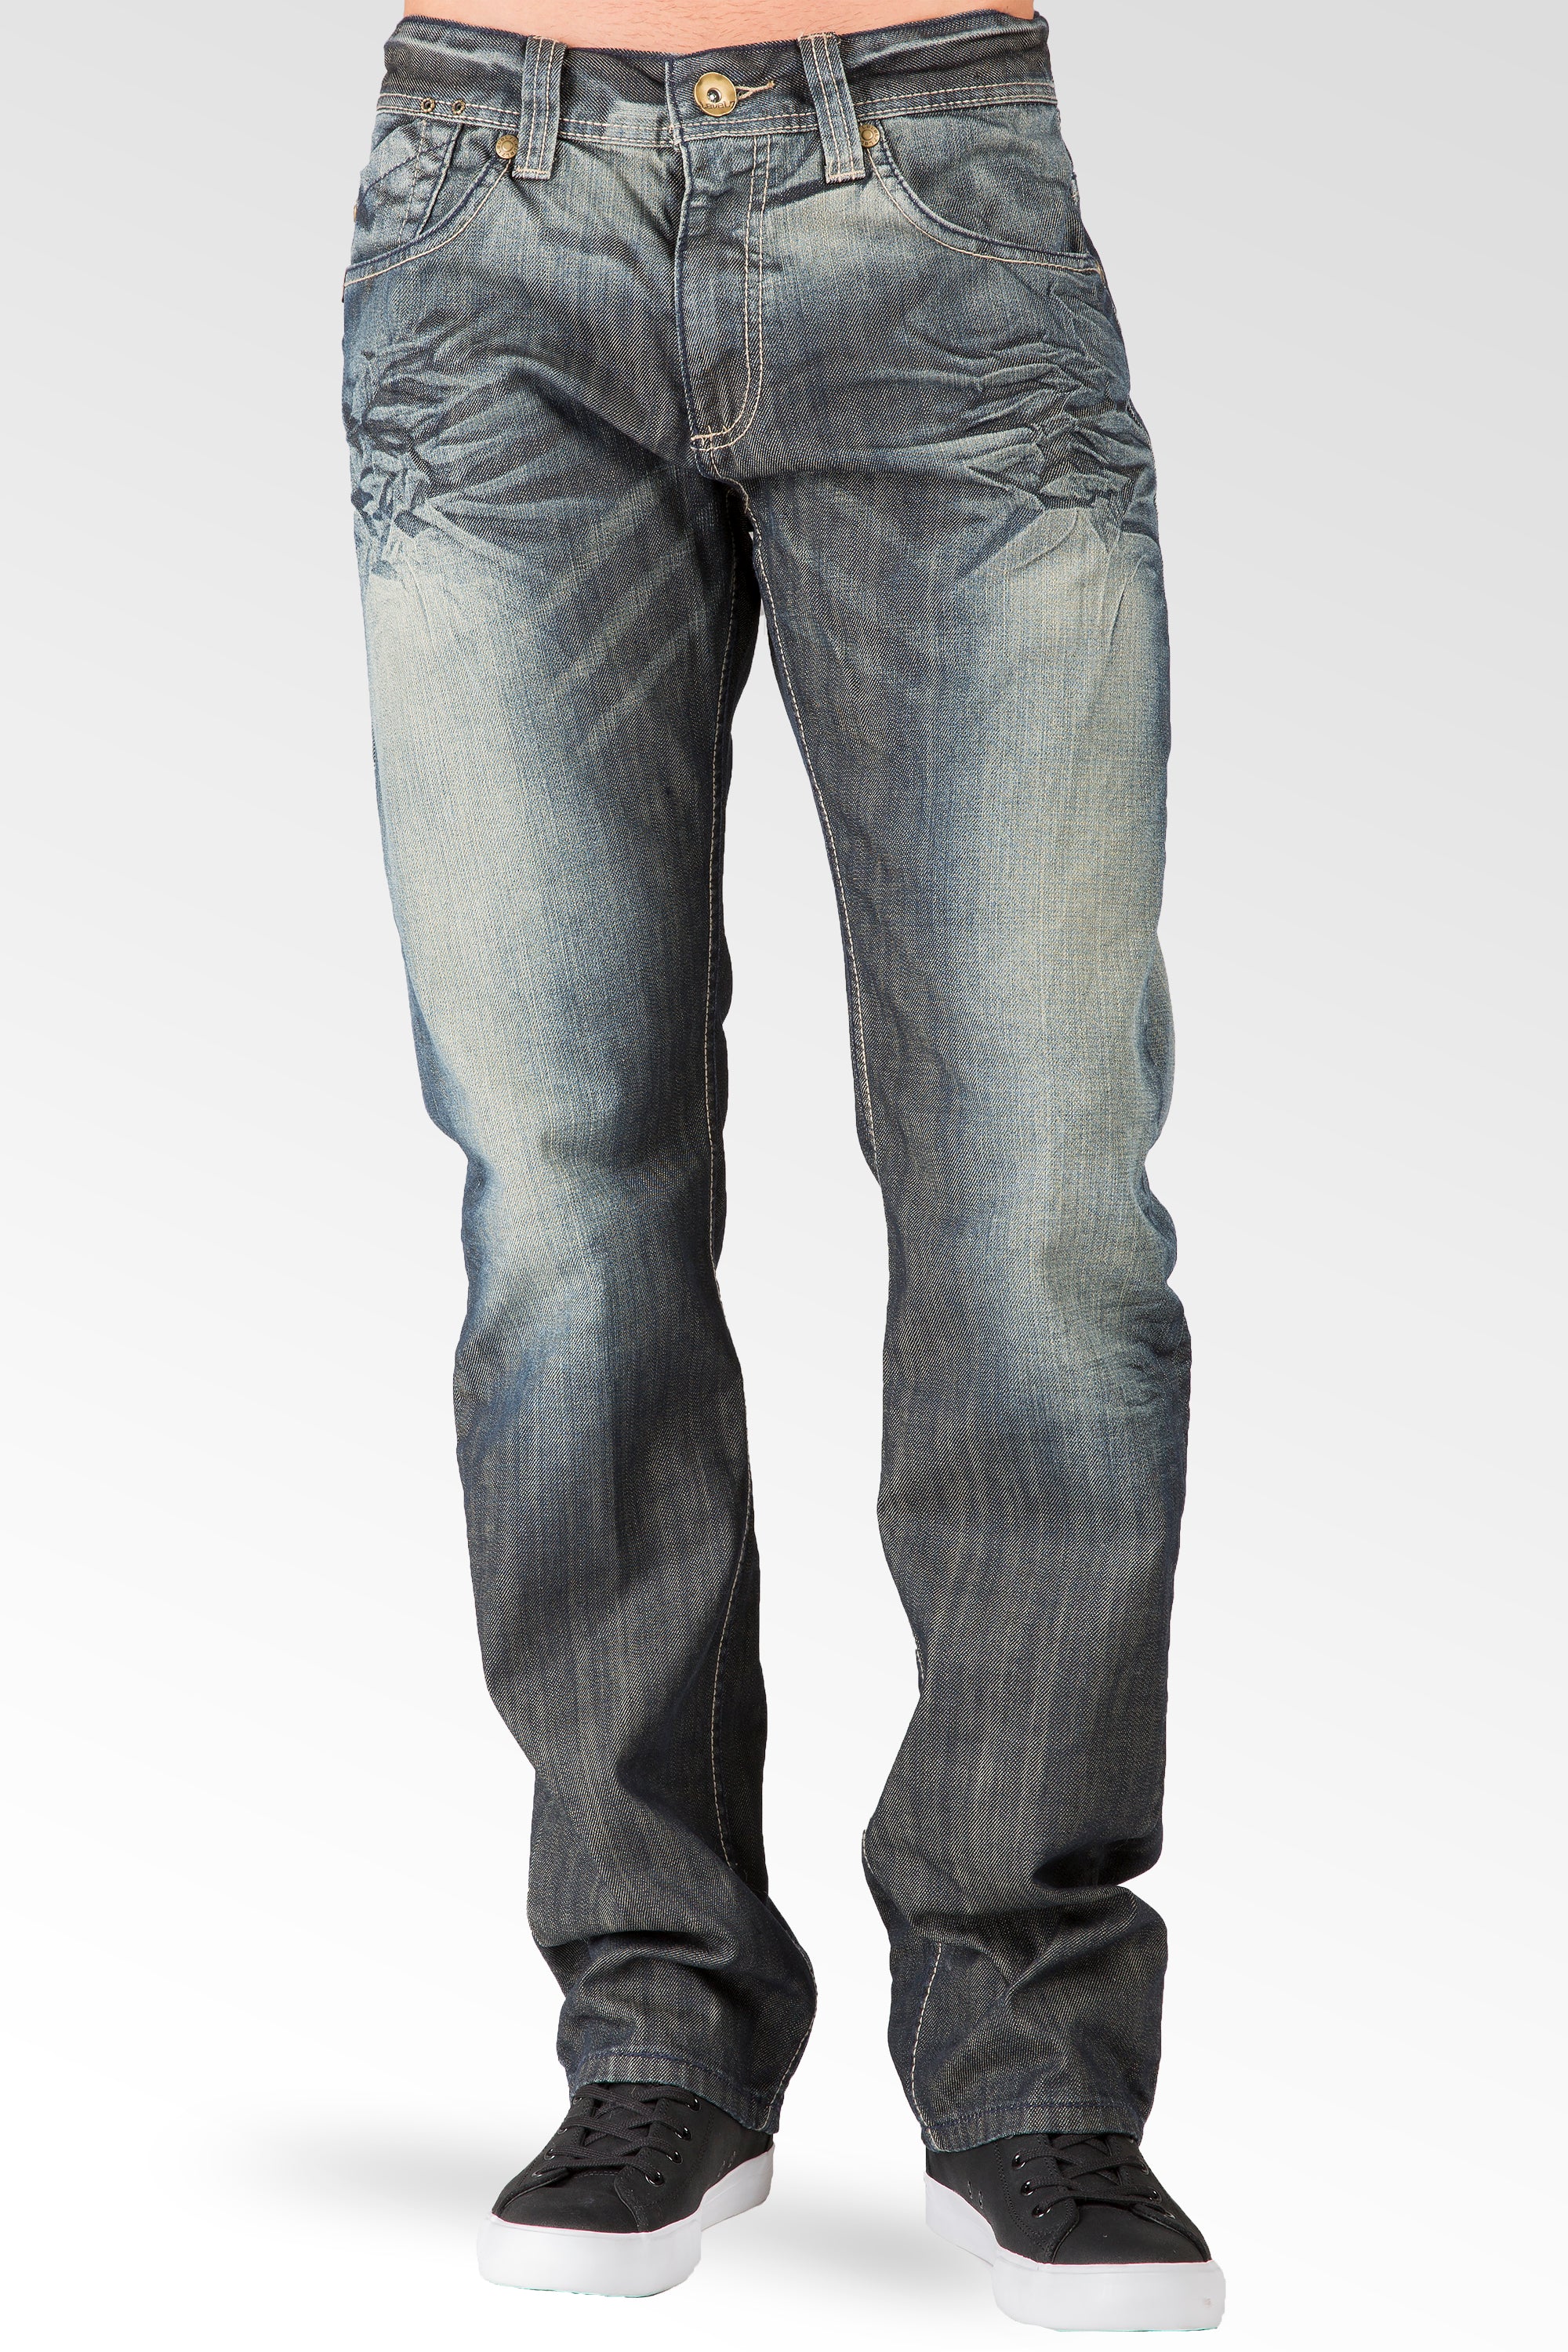 Level 7 Dark Indigo Premium Coated 3D Whiskering Wash 5 Pkt Knit Denim Jeans  – Level 7 Jeans